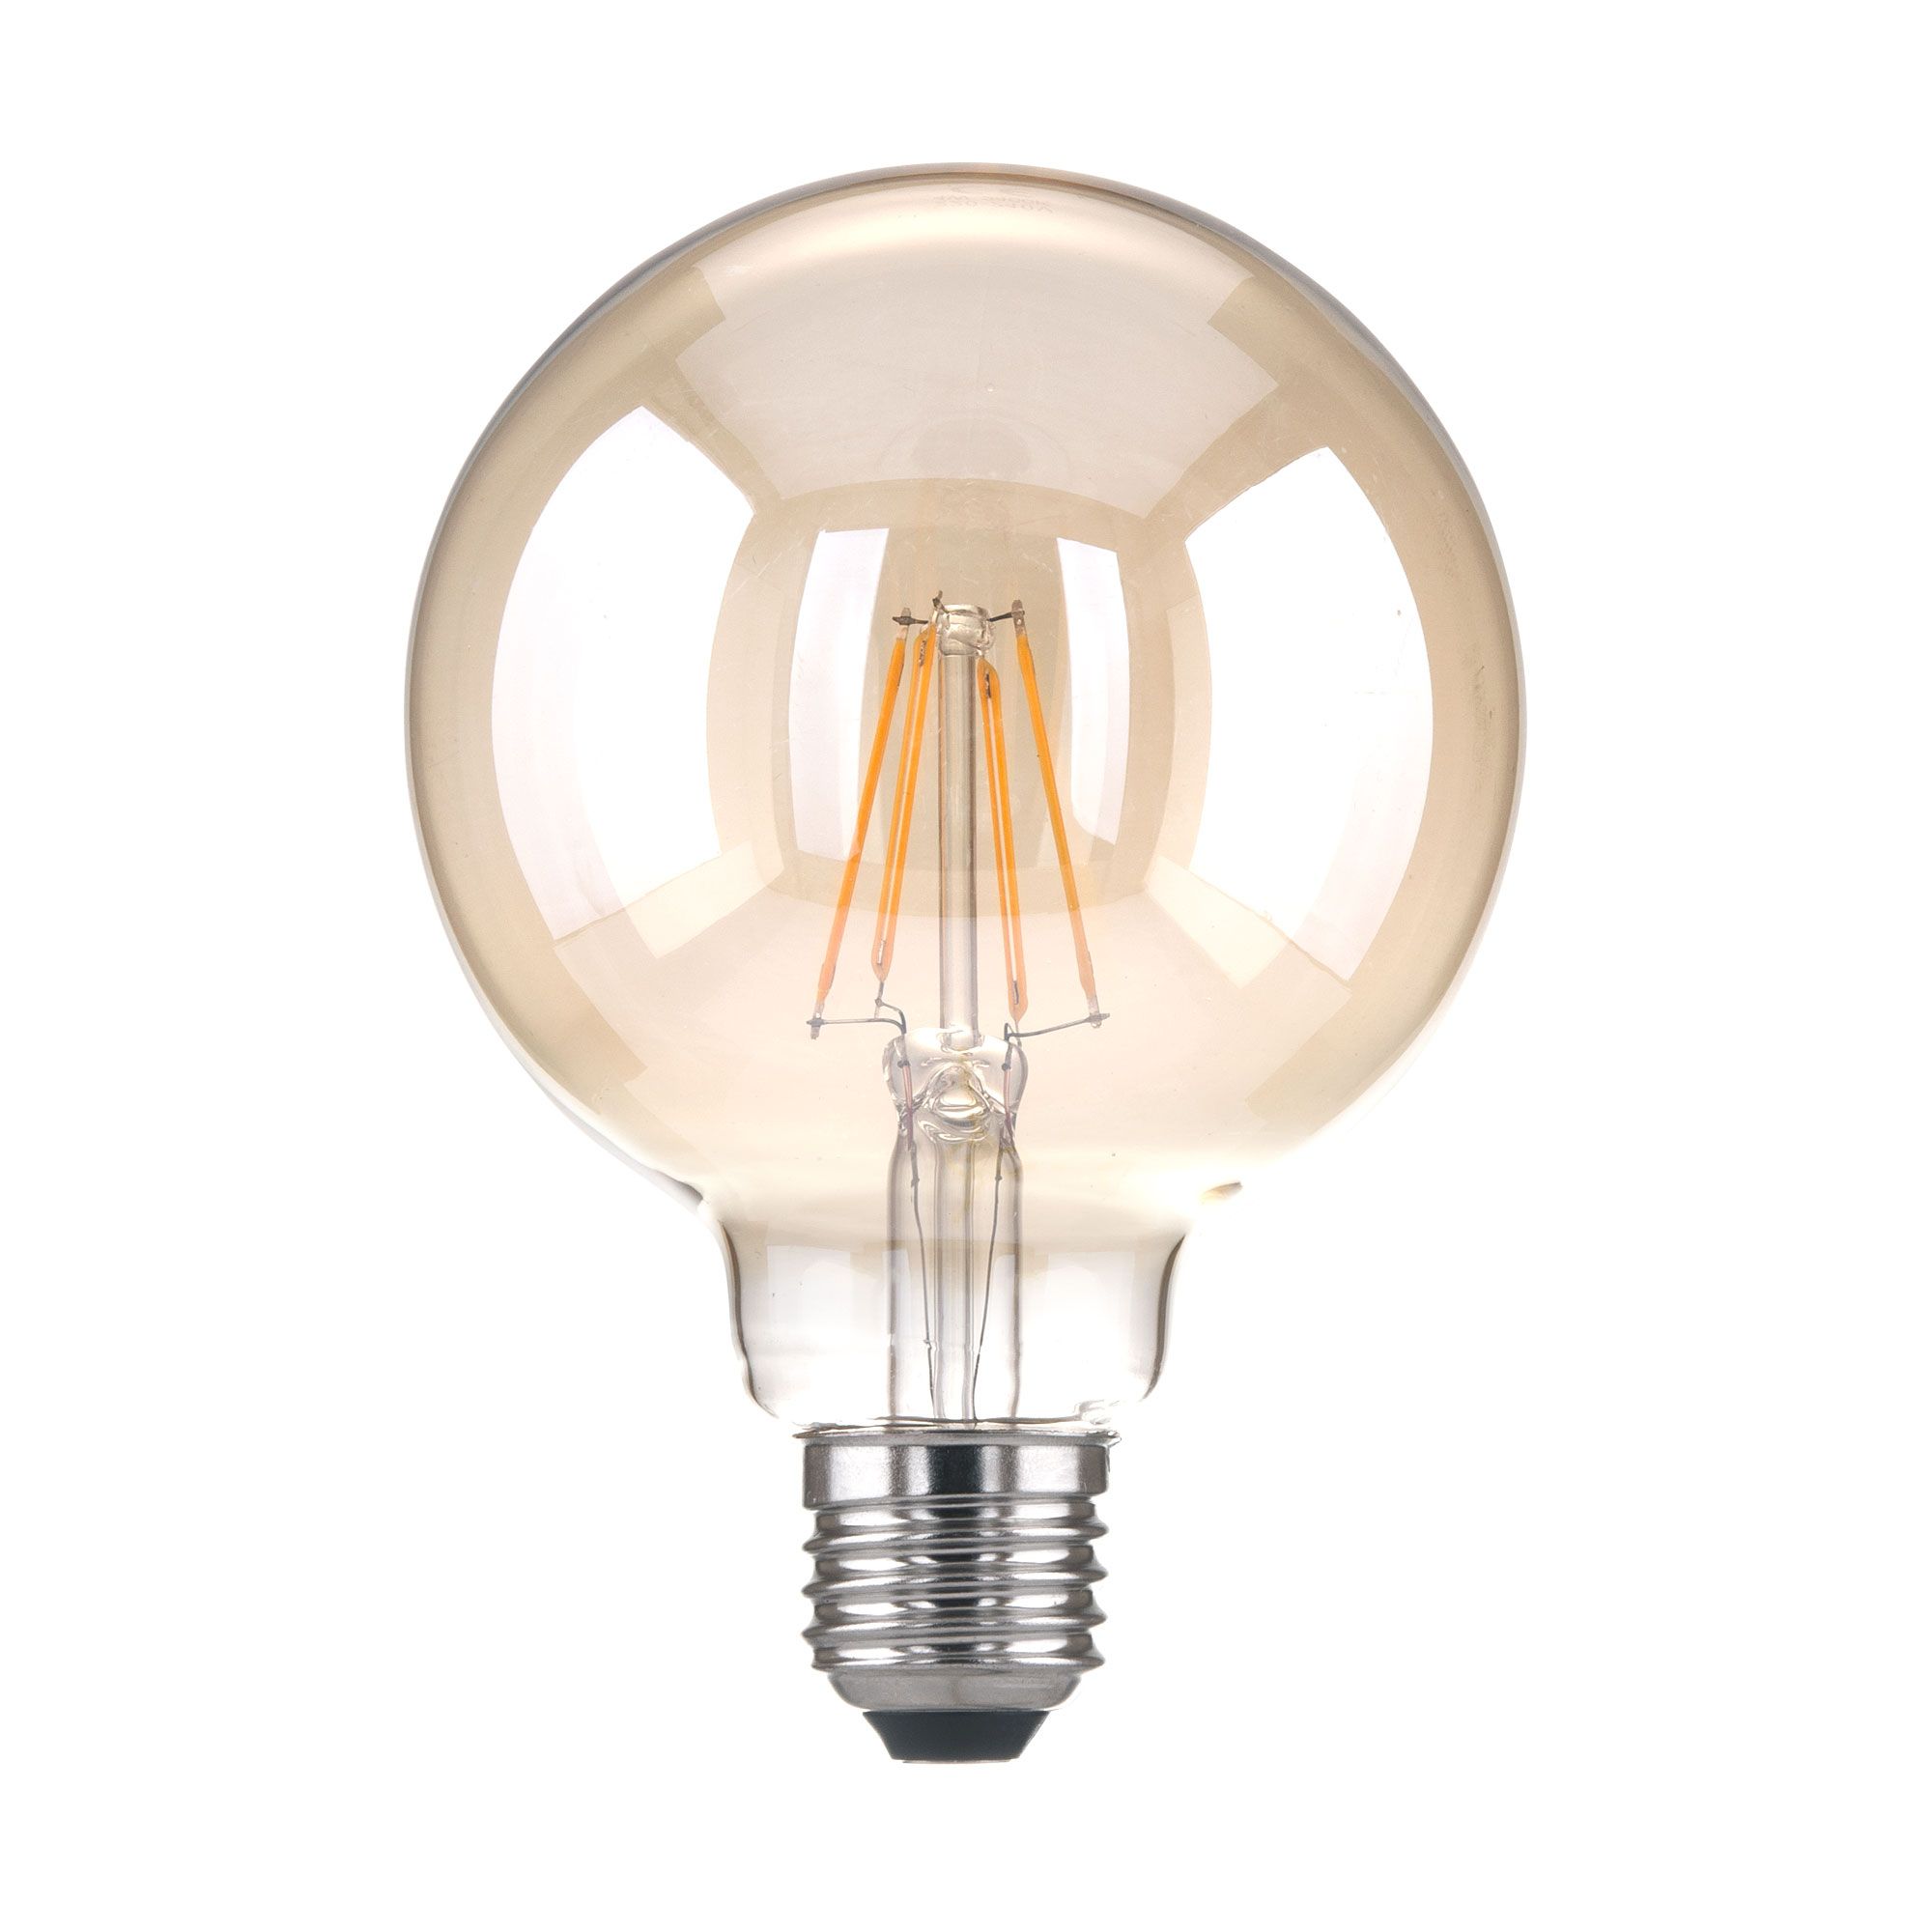 Качественная картинка Филаментная светодиодная ретро лампа Dimmable Elektrostandard G95 6W 3300K E27